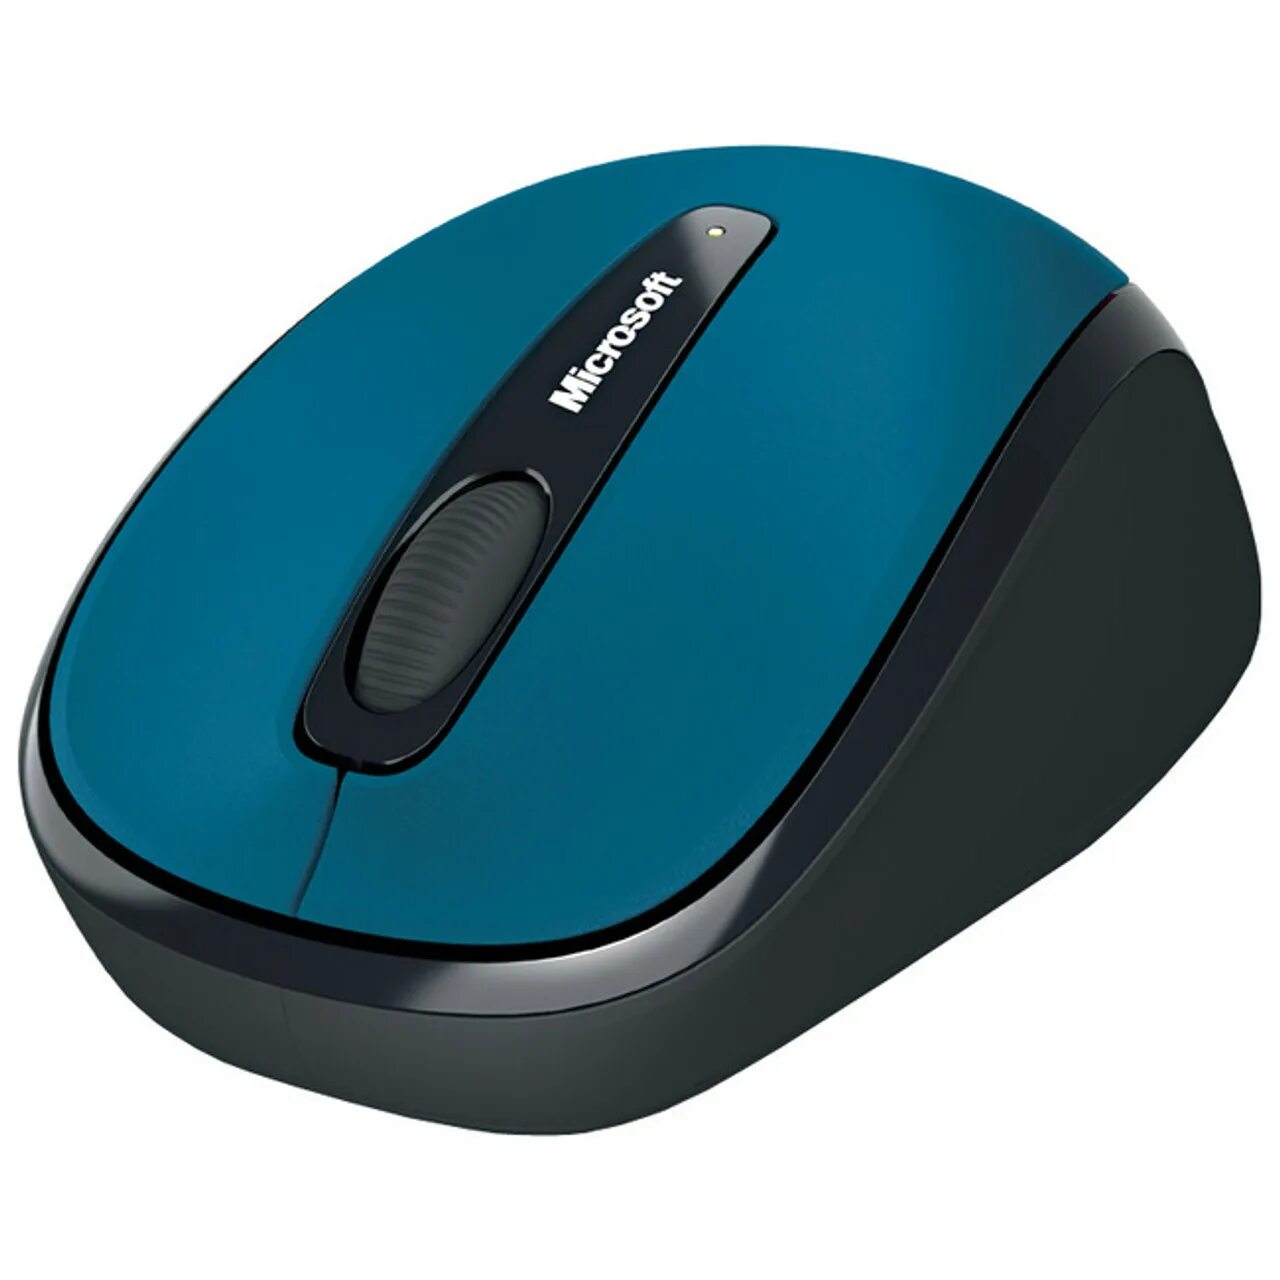 Мыши москва. Microsoft Mouse 3500. Microsoft Wireless mobile 3500. Microsoft Wireless mobile Mouse 1000. Мышь беспроводная Microsoft 3500 Wireless mobile Mouse, голубой.